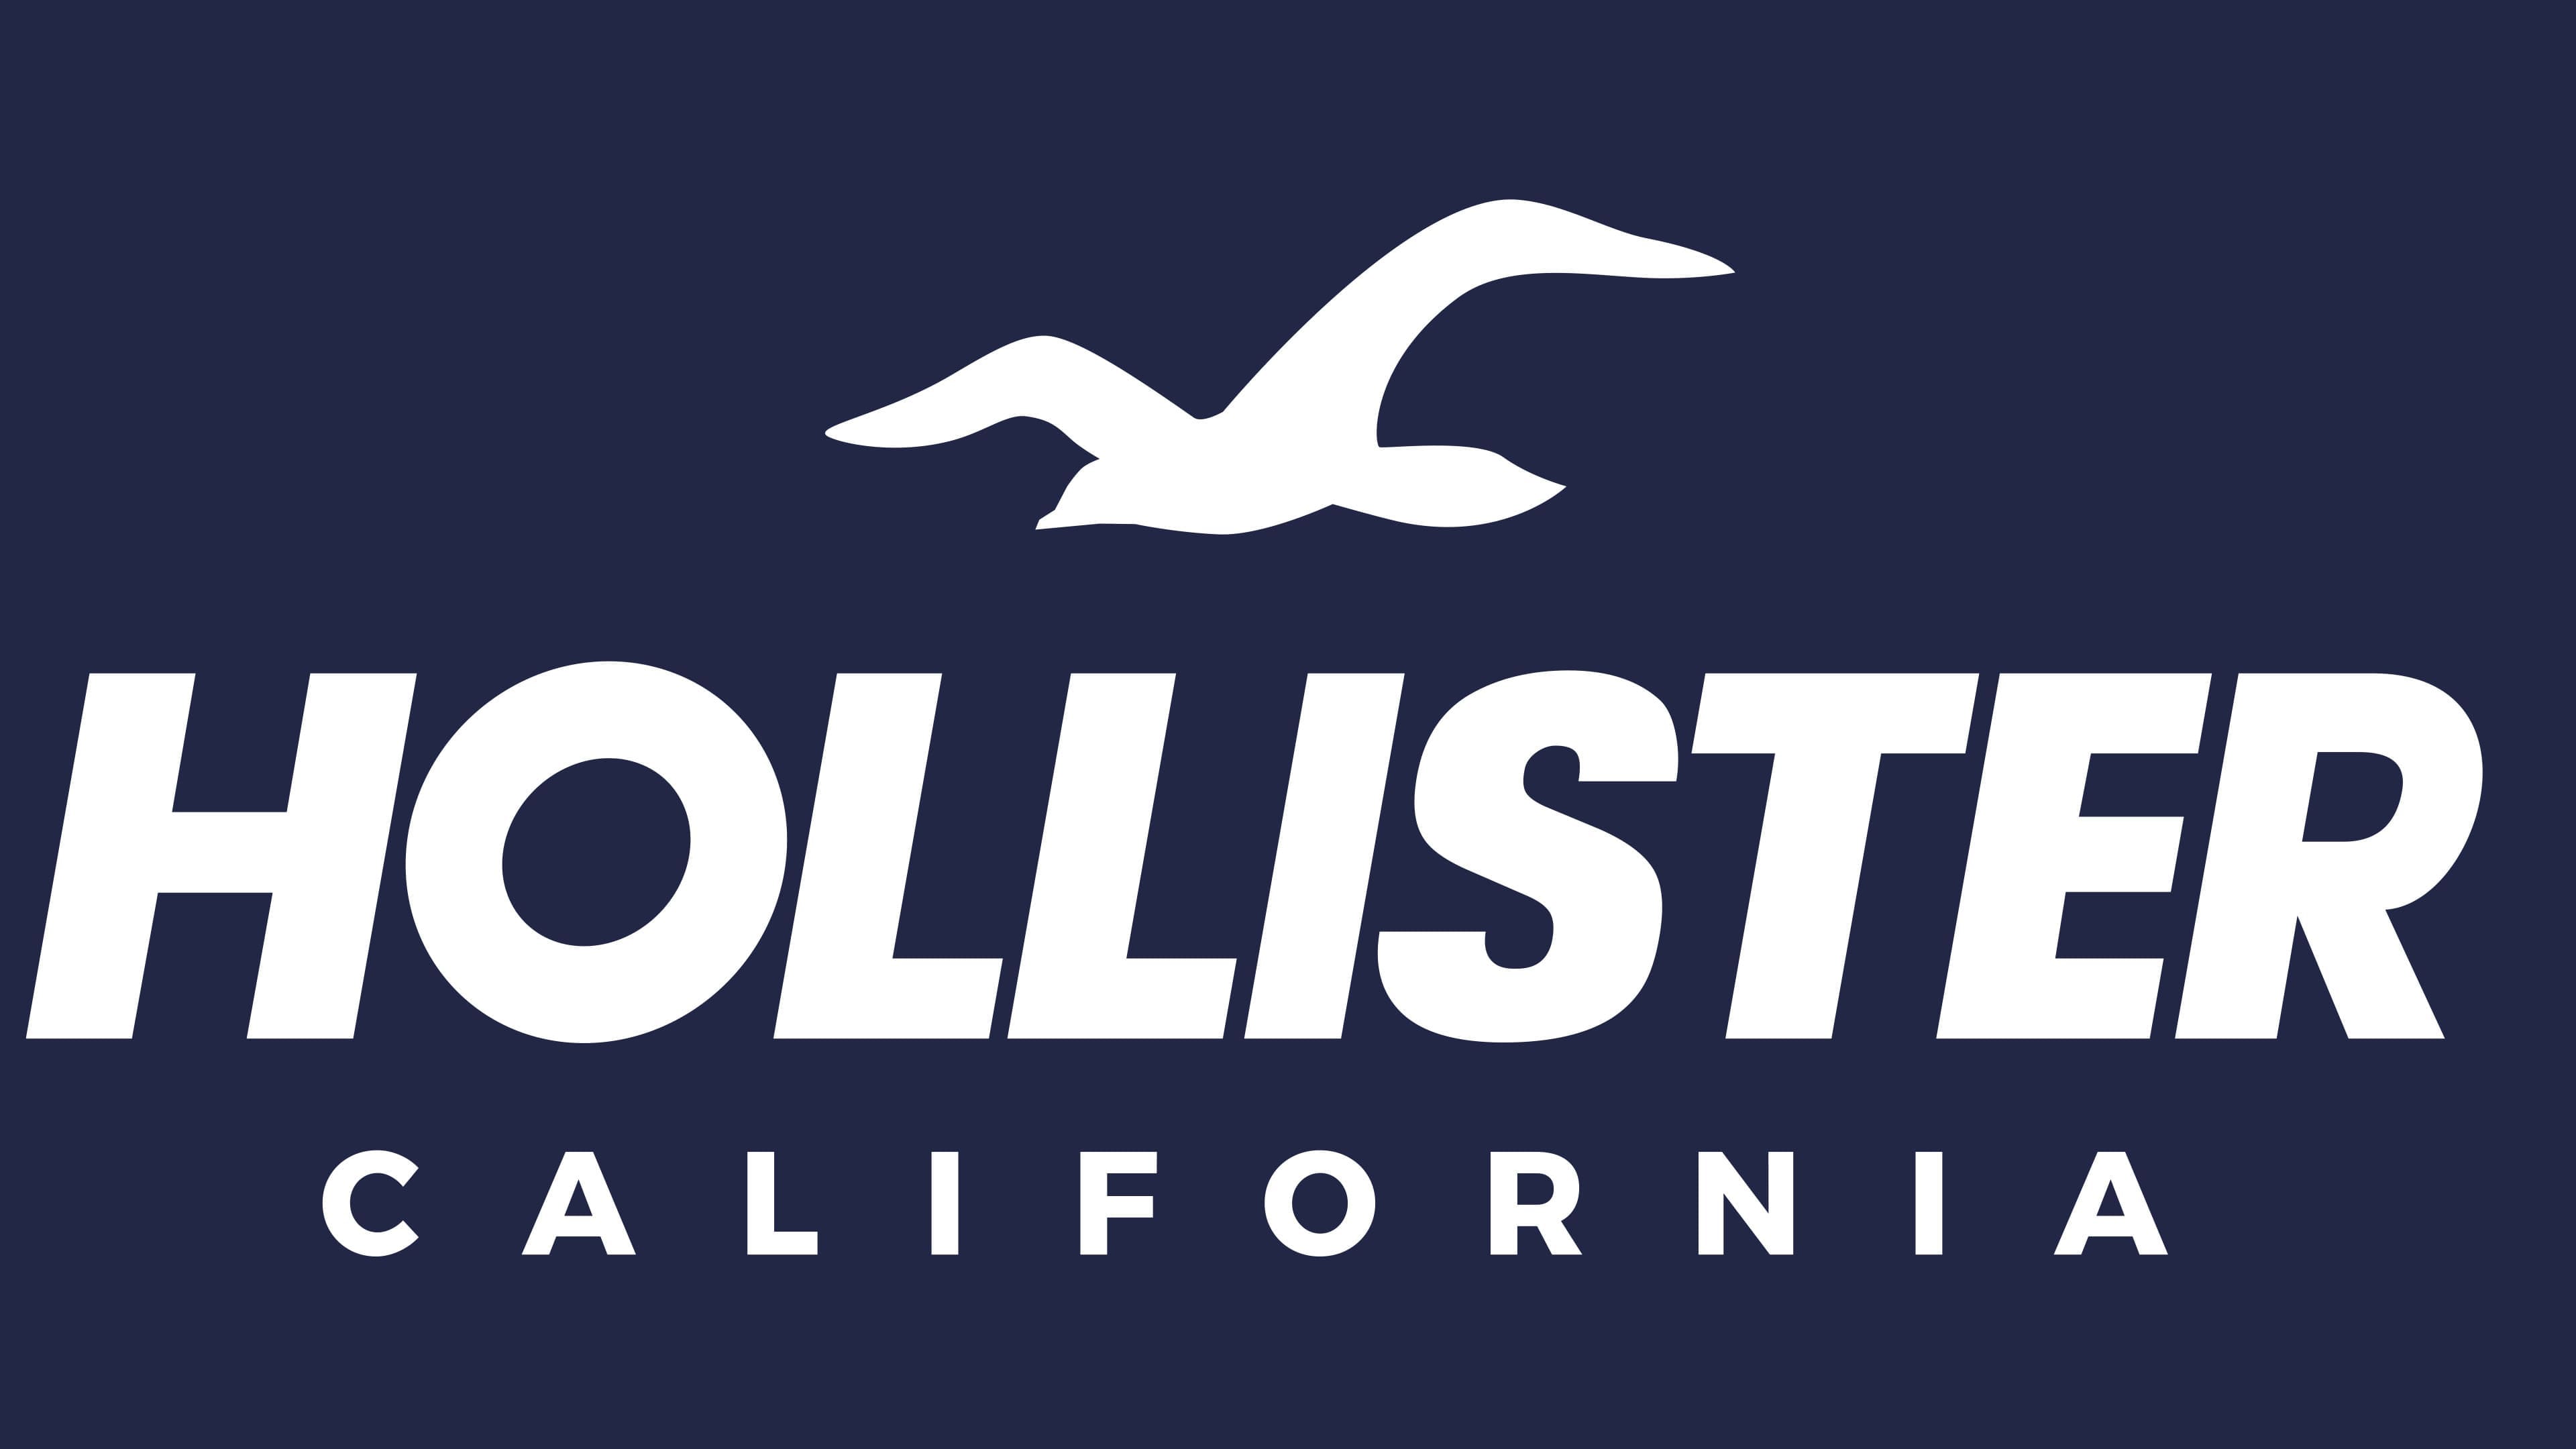 https://logos-world.net/wp-content/uploads/2020/09/Hollister-Symbol.jpg